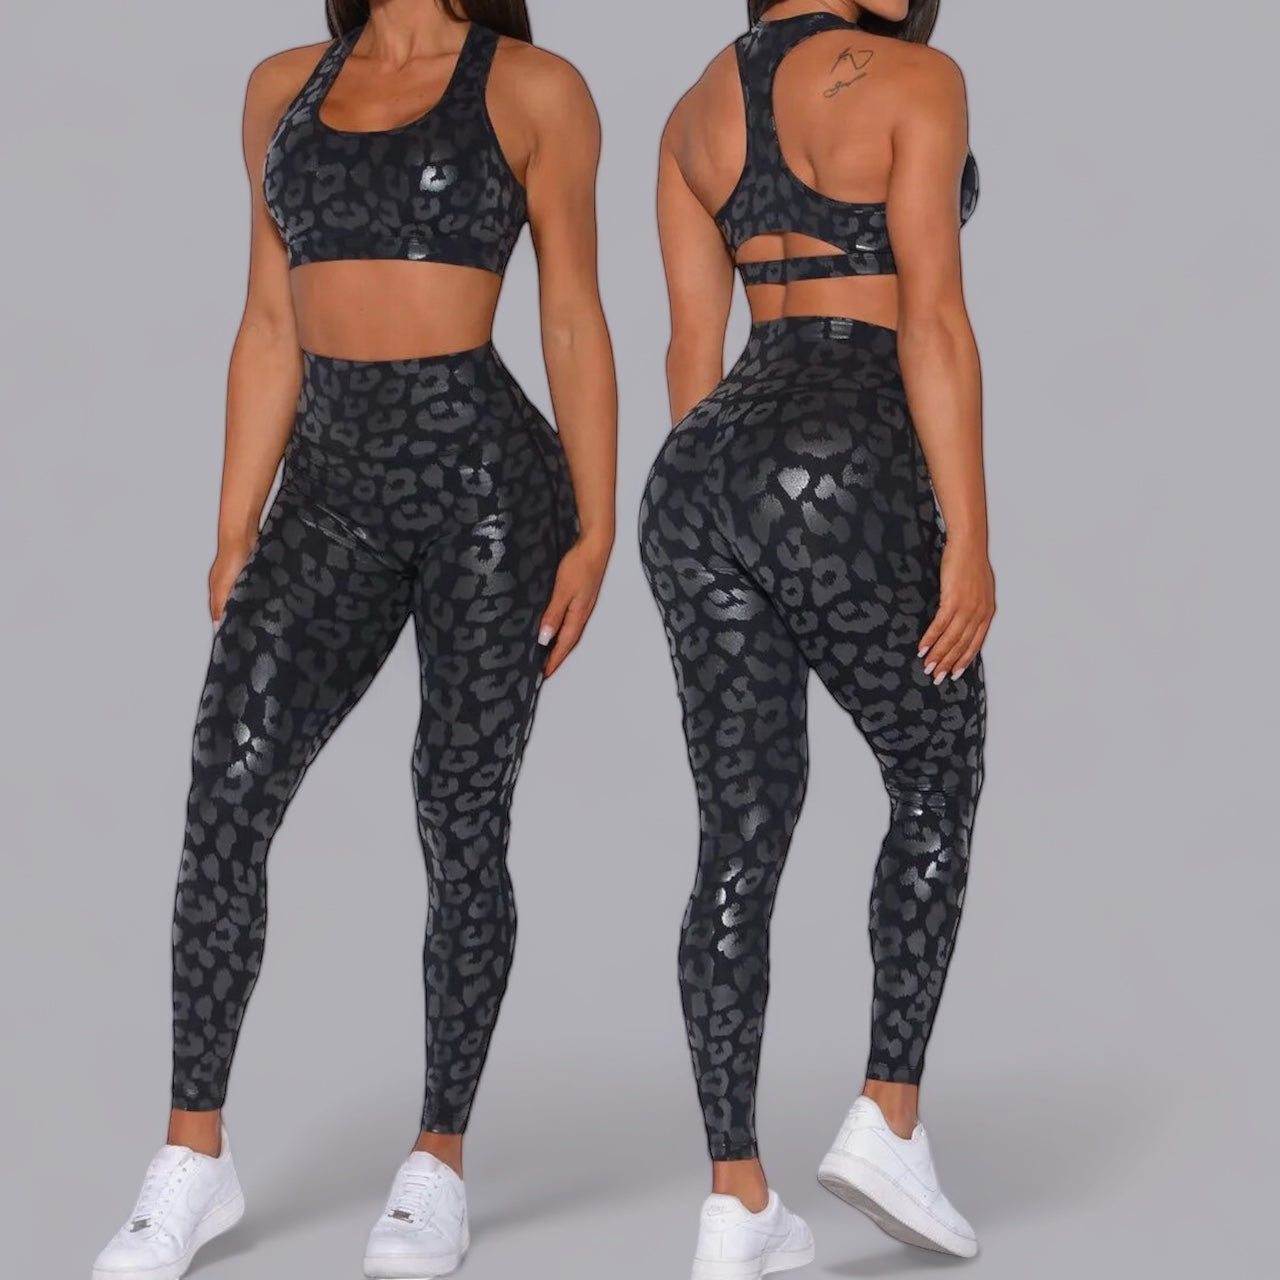 Sport Set leopard supplex - top and legging